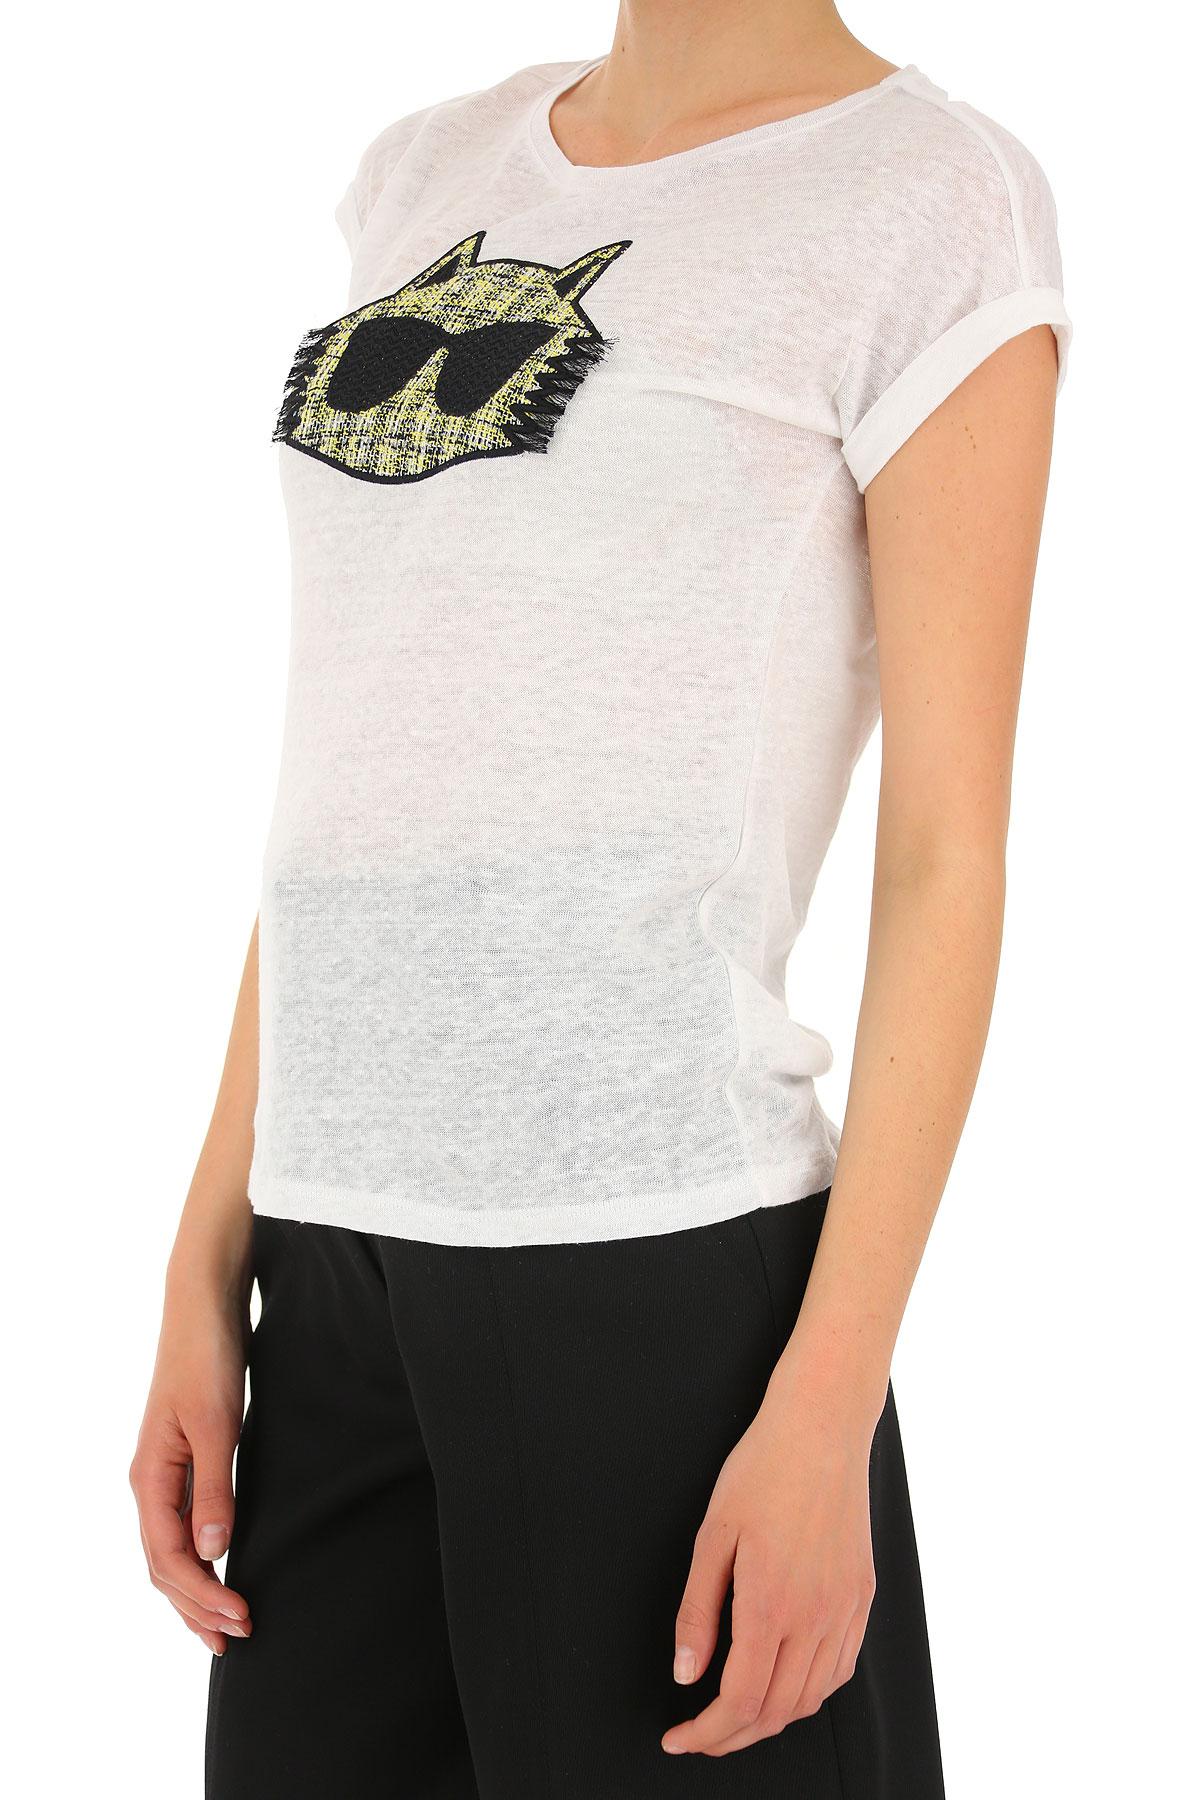 Karl Lagerfeld Linen T-shirt For Women On Sale in White - Lyst